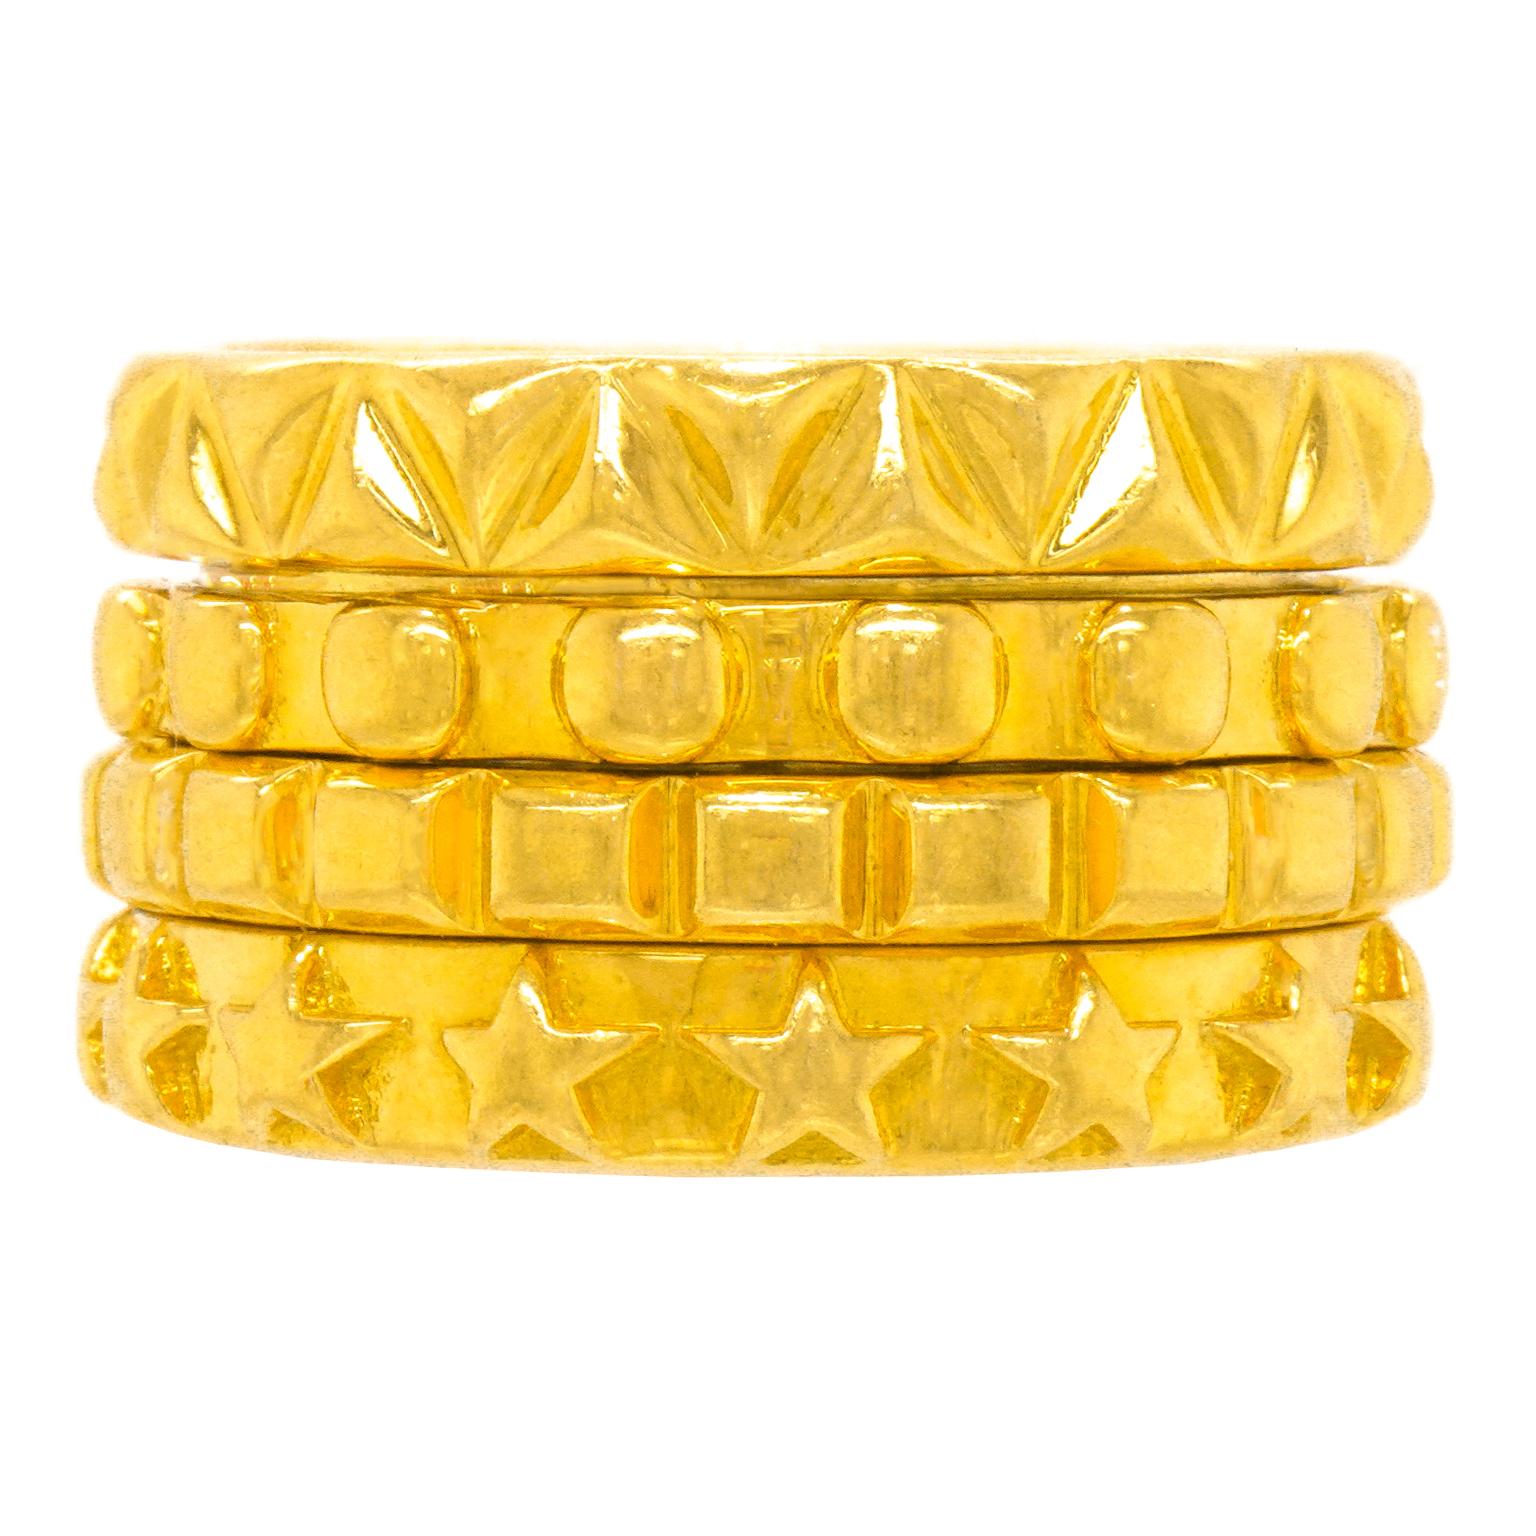 Buy Honbon American Diamond Golden Plated Sleek Bangles for Women And Girls  Office Kade (Pack of 2) at Amazon.in